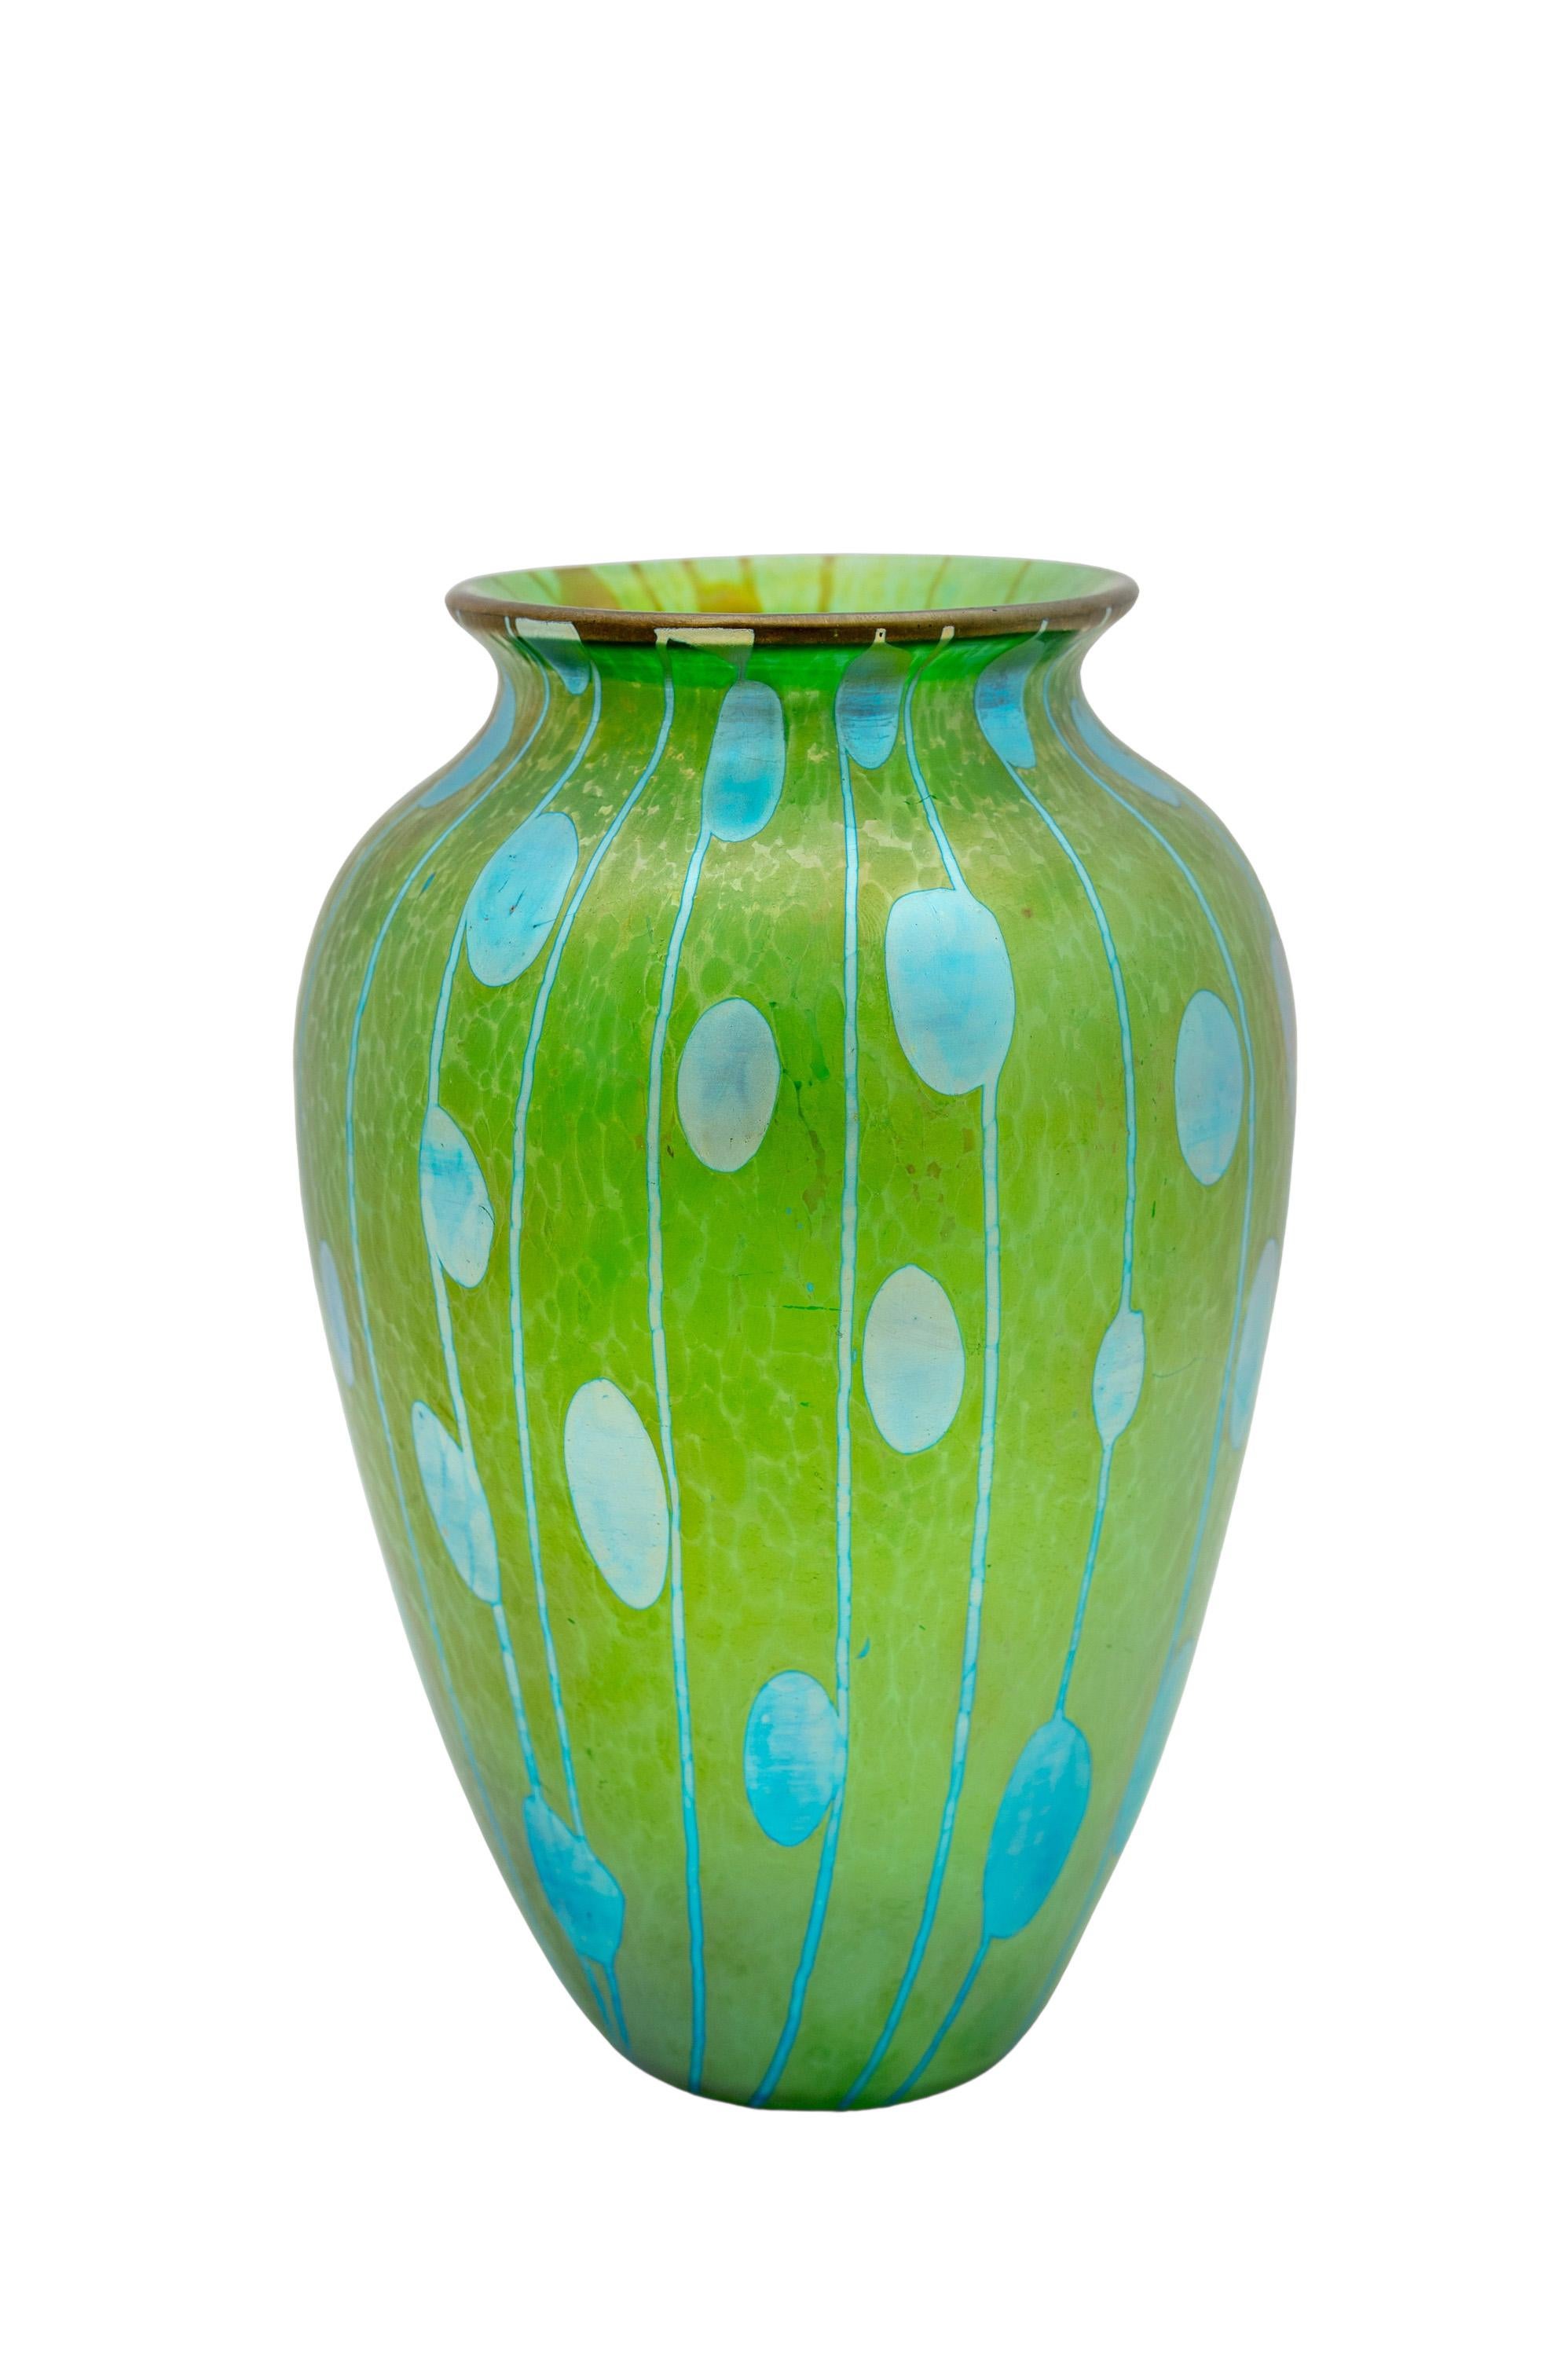 Bohemian glass vase, manufactured by Johann Loetz Witwe, Flecken und Streifen decoration, ca. 1900, Green, Blue, Viennese Art Nouveau, Jugendstil, Art Deco, art glass, iridescent glass.

This vase stuns with its bright green color and specs of blue.